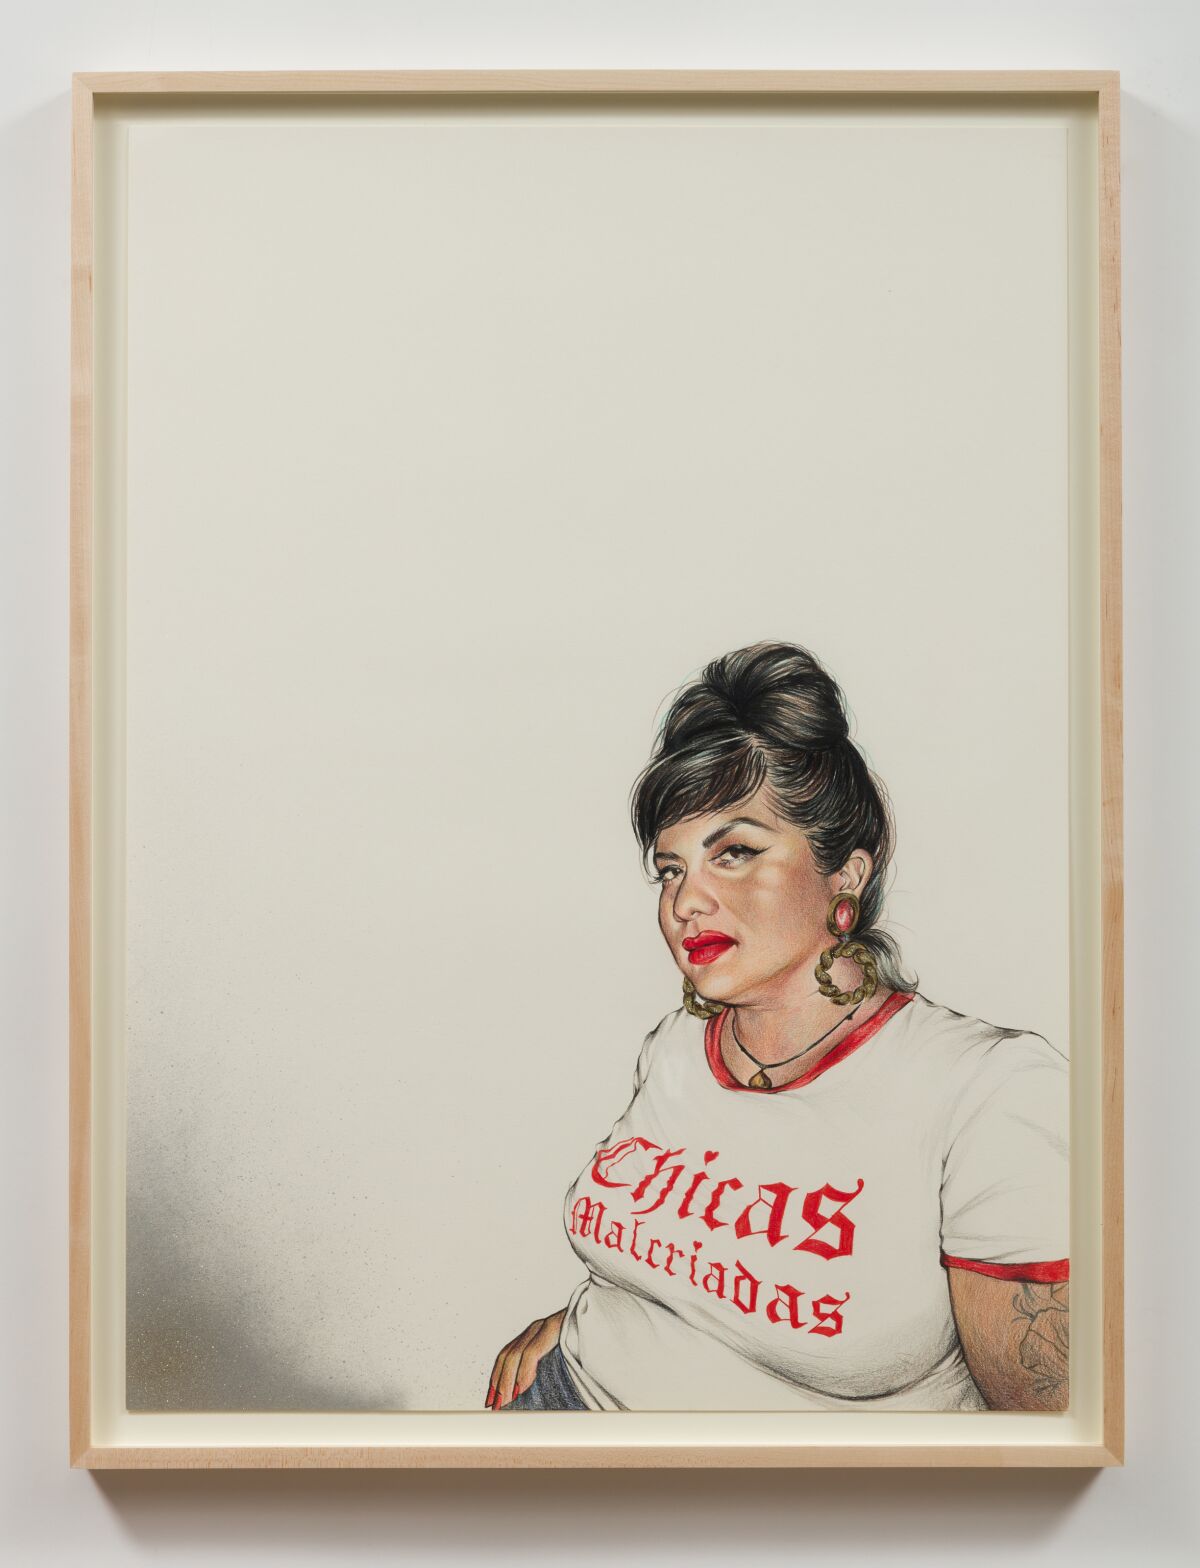 "La Ever, Chica Malcriada," 2018, a portrait by L.A. painter Shizu Saldamando on view at Oxy Arts.